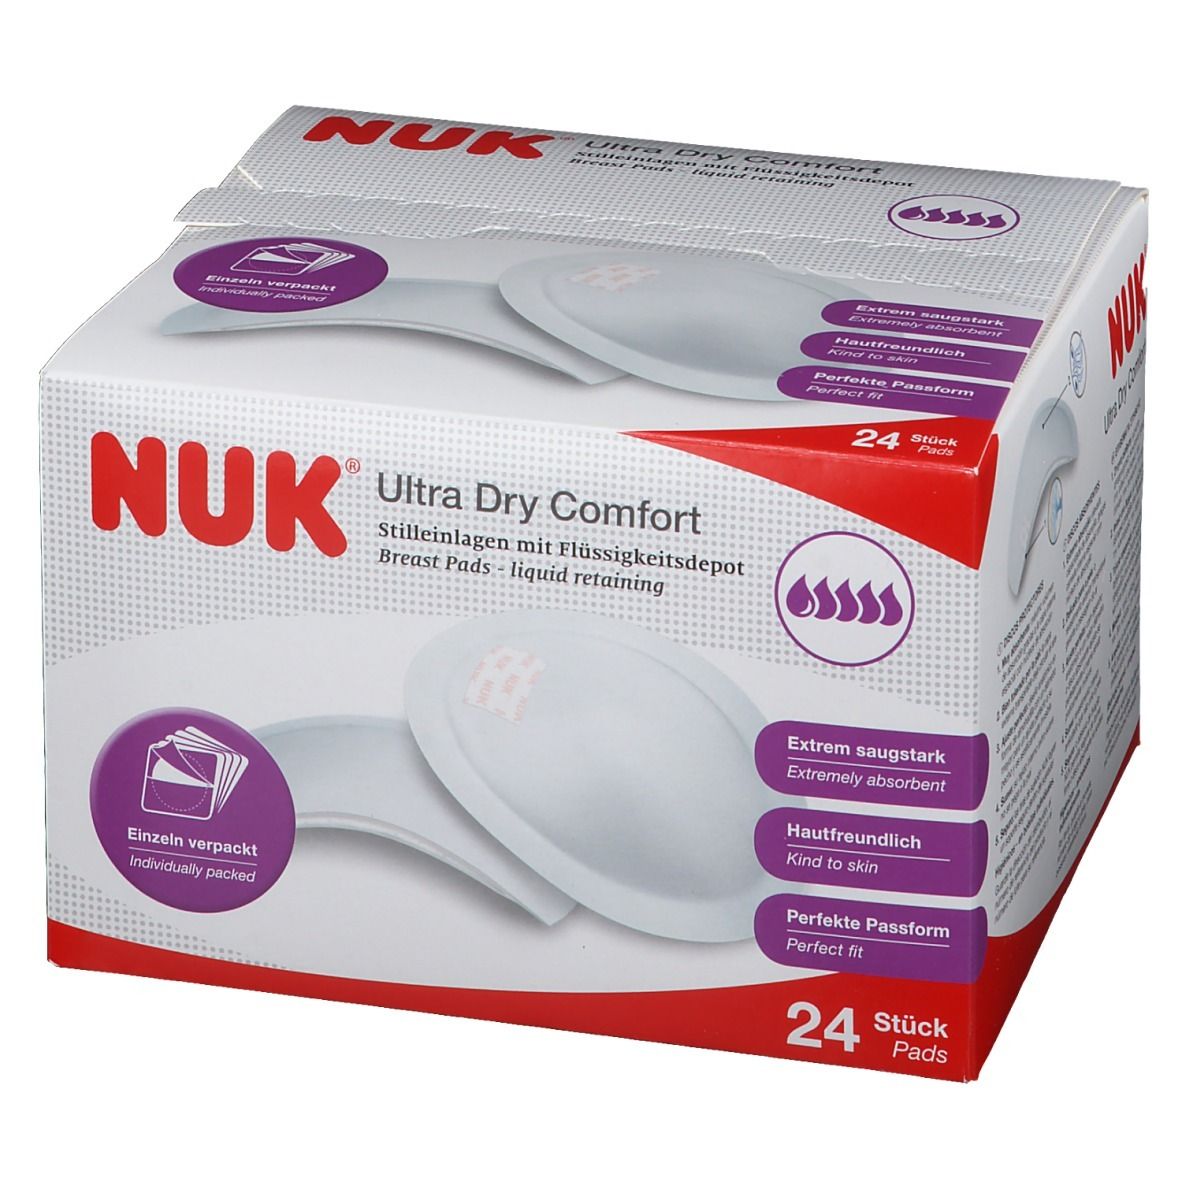 NUK Ultra Dry Comfort Stilleinlagen Saugstark Perfekte Passform 60er Pack 